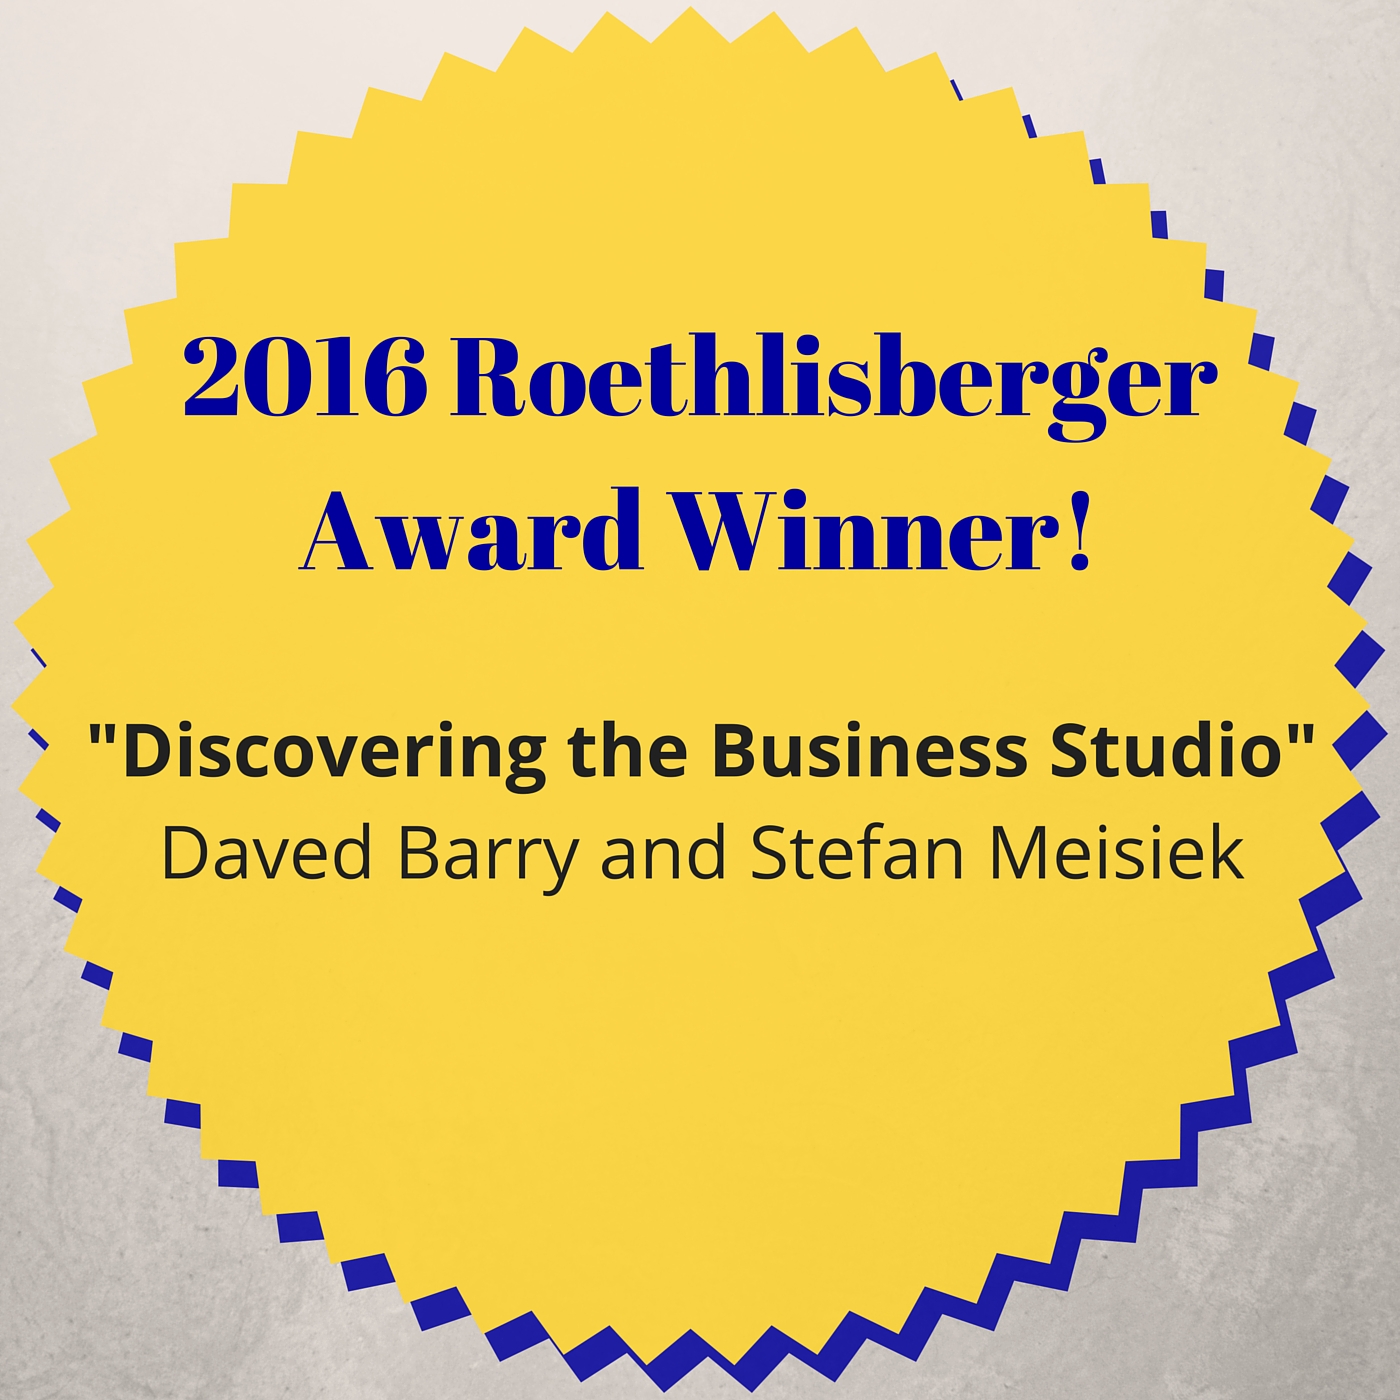 2016 Roethlisberger Award Winner